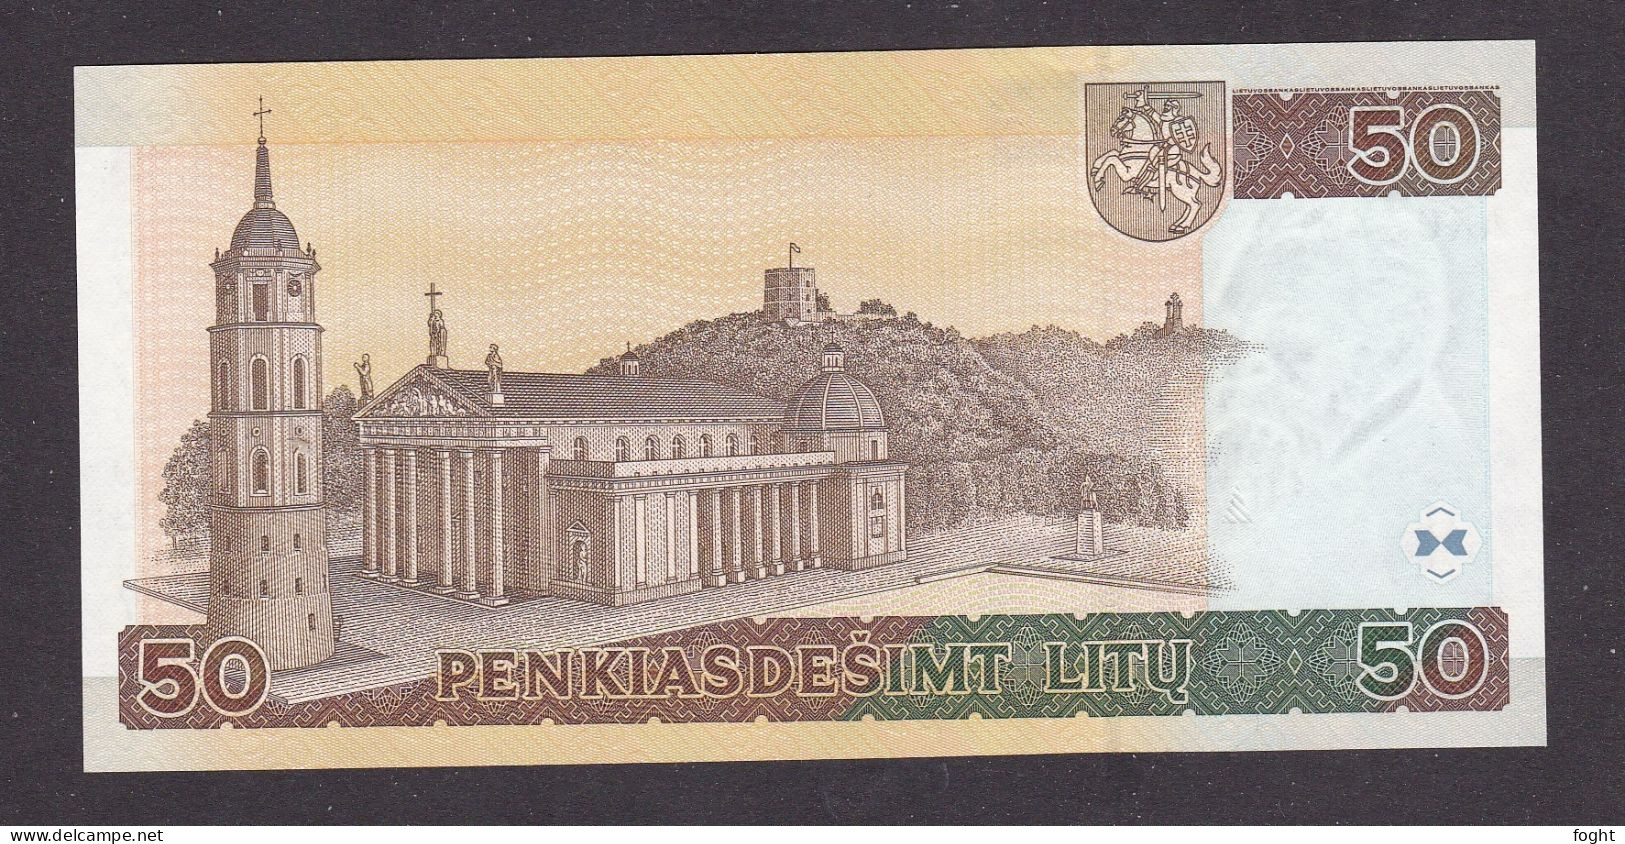 2003 AK Lithuania Bank Of Lithuania Banknote 50 Litų,P#67,UNC - Lithuania